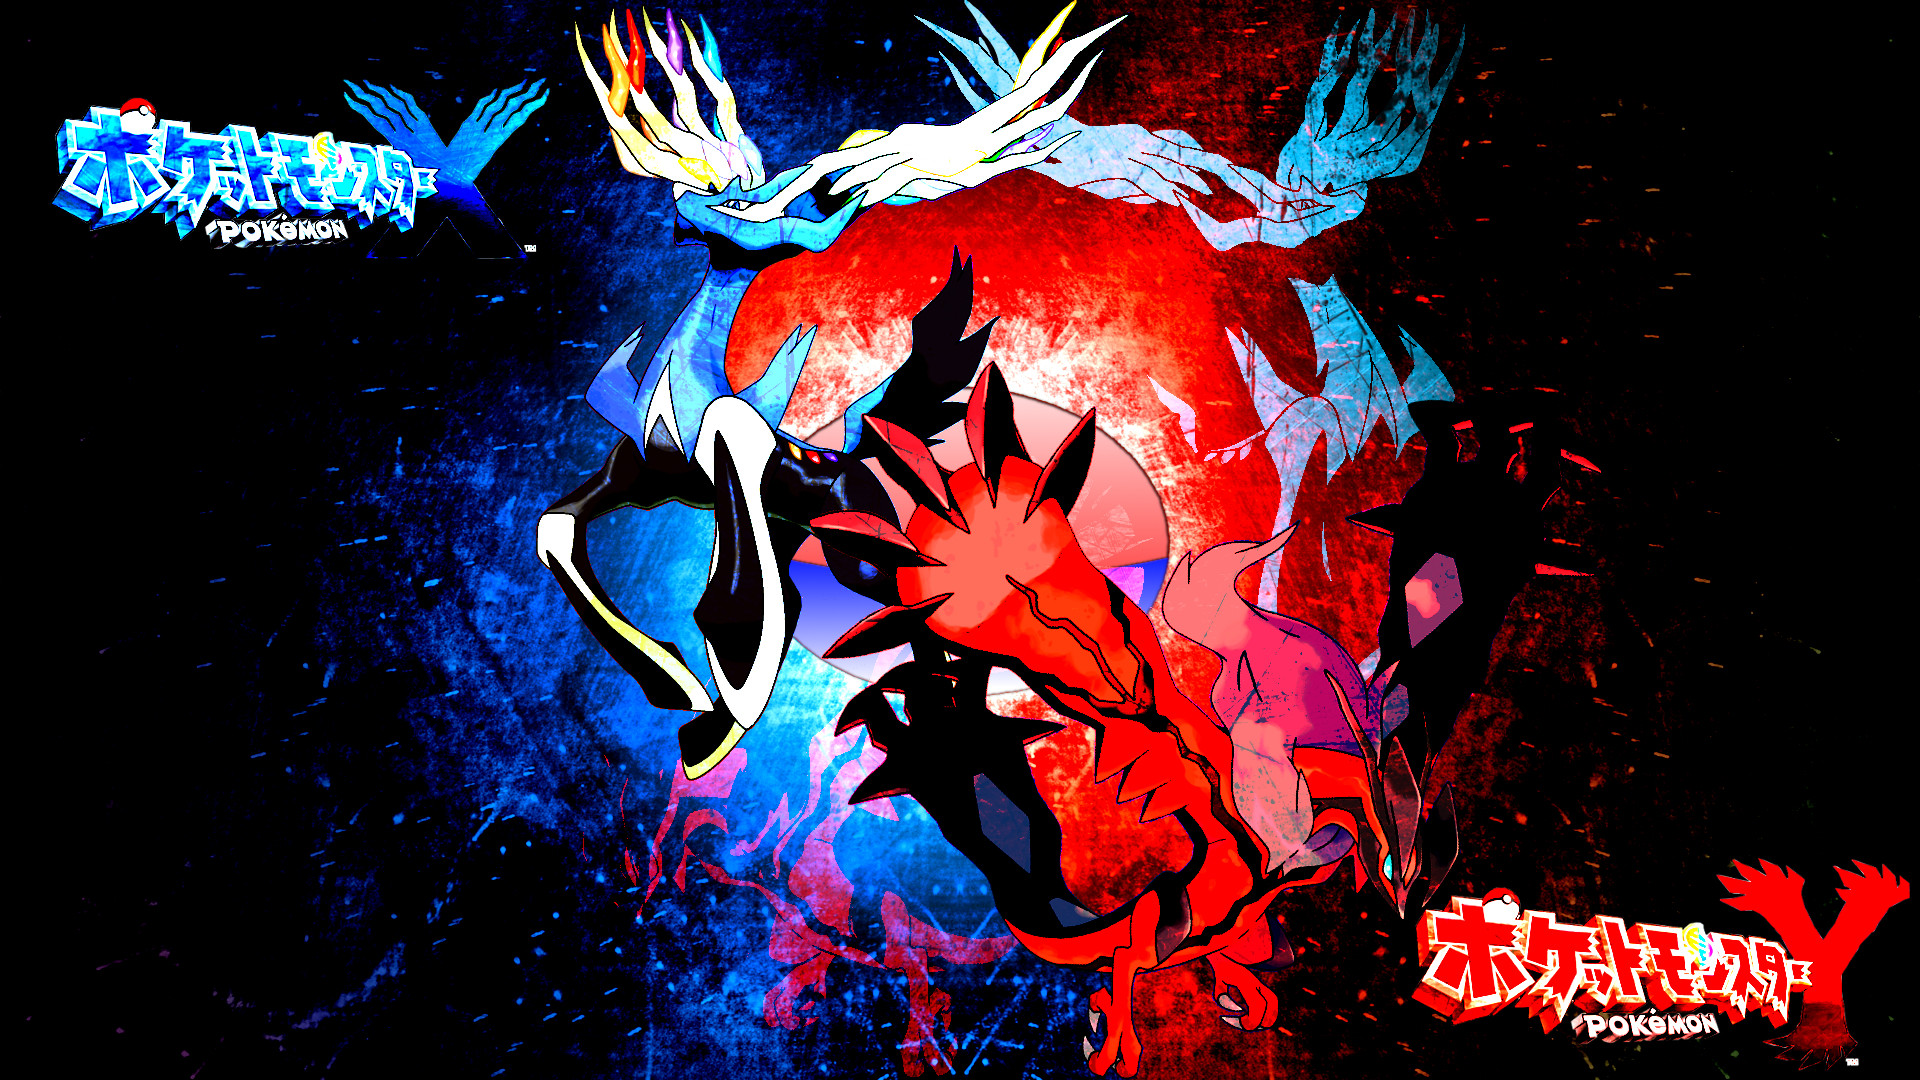 1920x1080 Legendary Pokemon images X/Y legendaries HD wallpaper and background photos